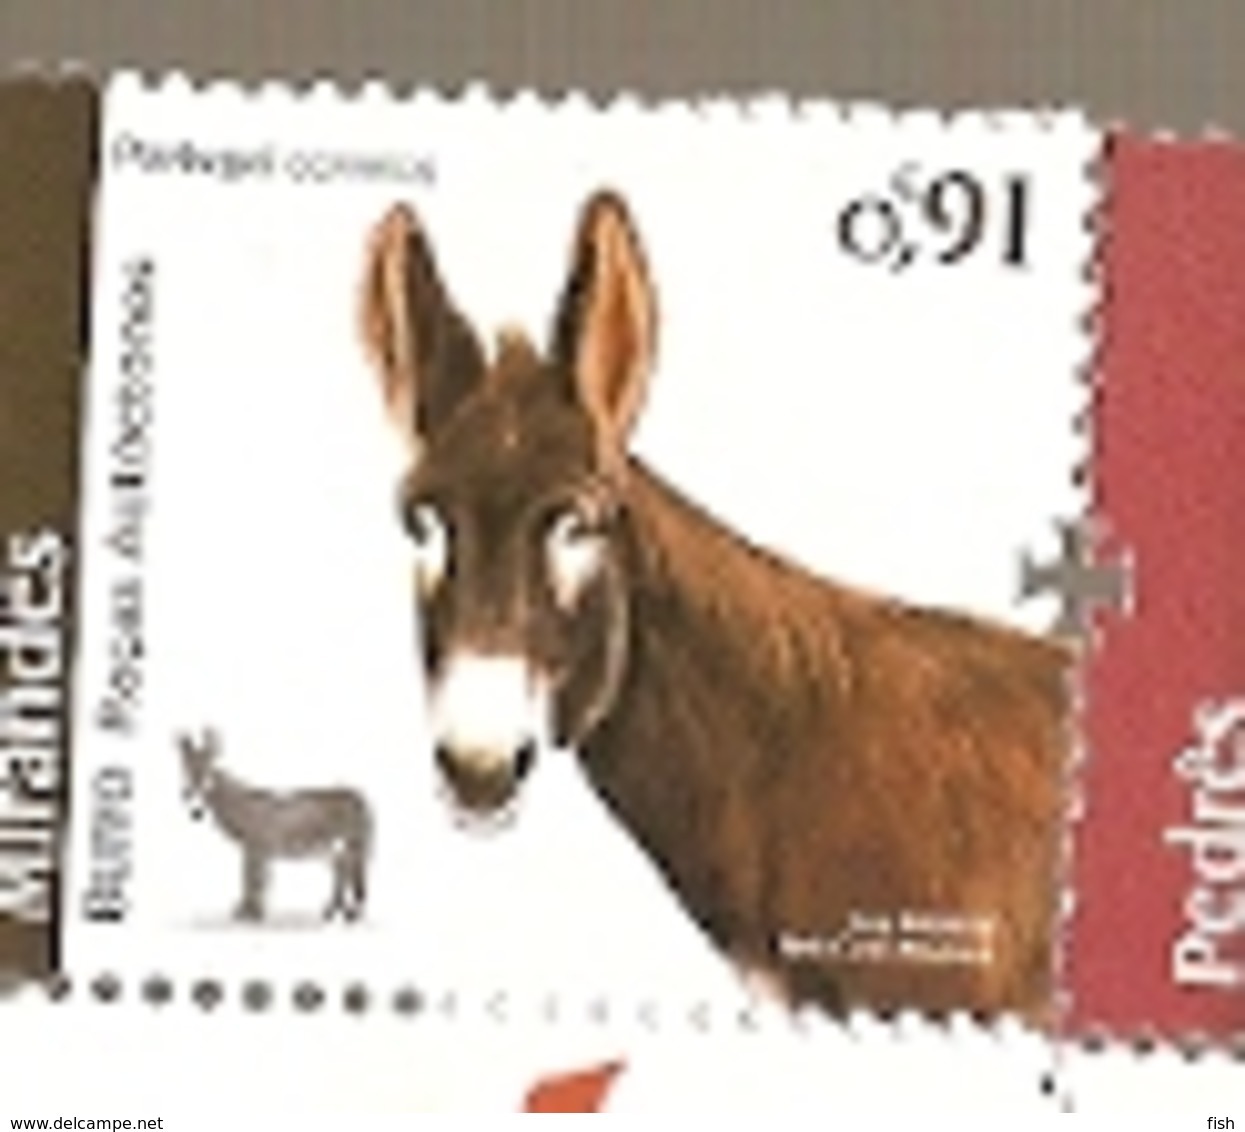 Portugal ** & Autochthonous Breeds Of Portugal, Mirandês Donkeys 2019 (5777) - Donkeys